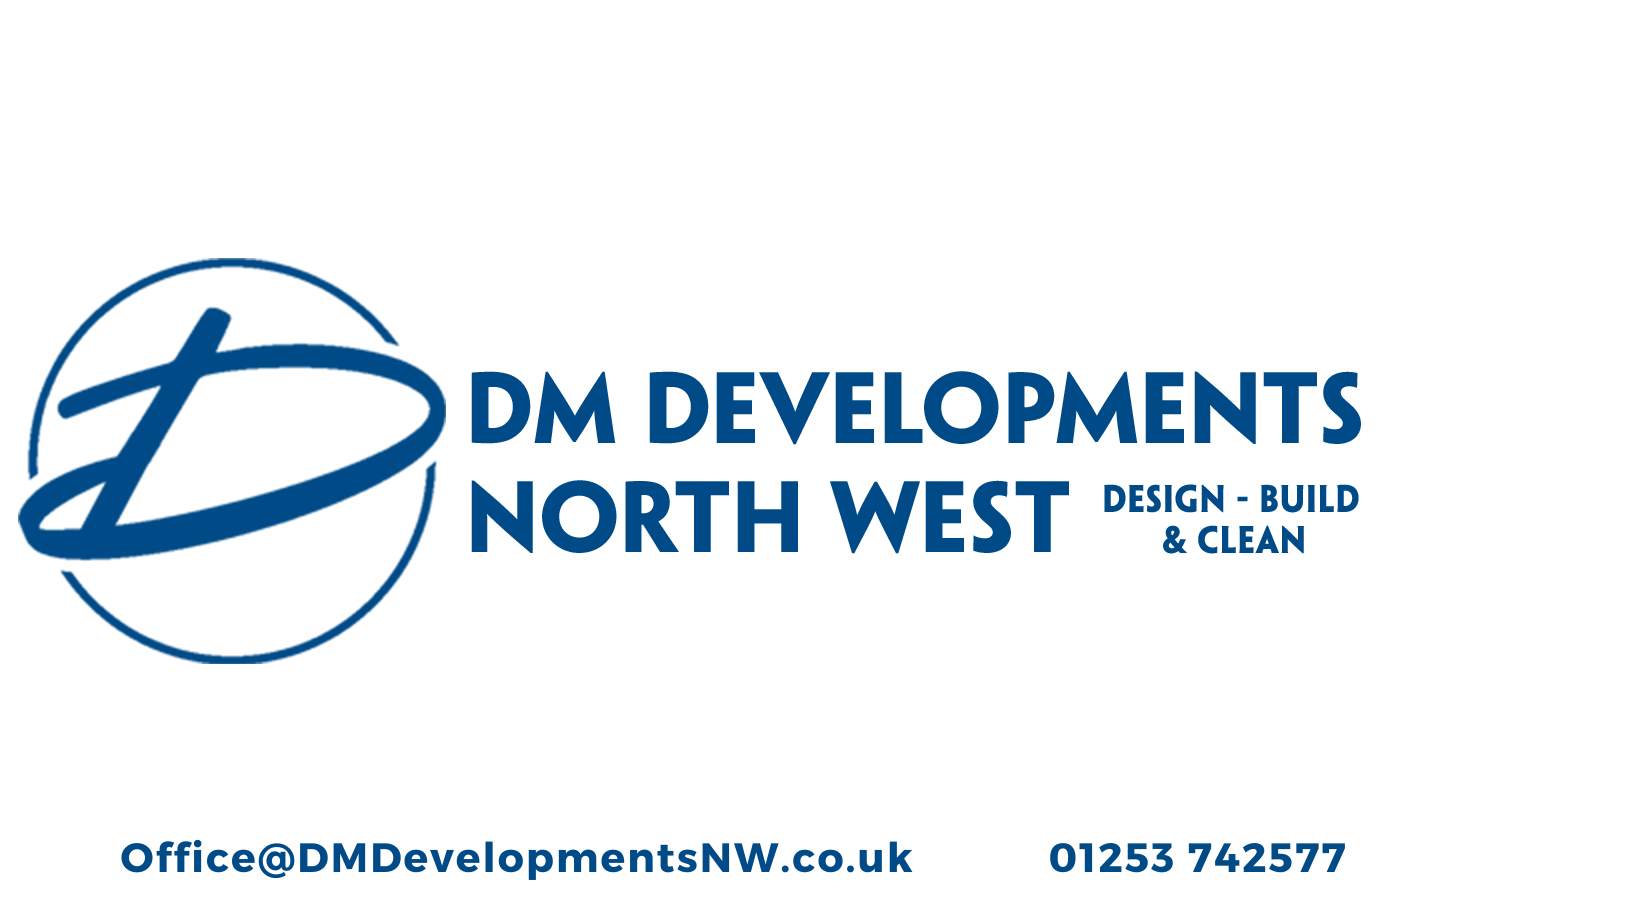 DM Developments North West